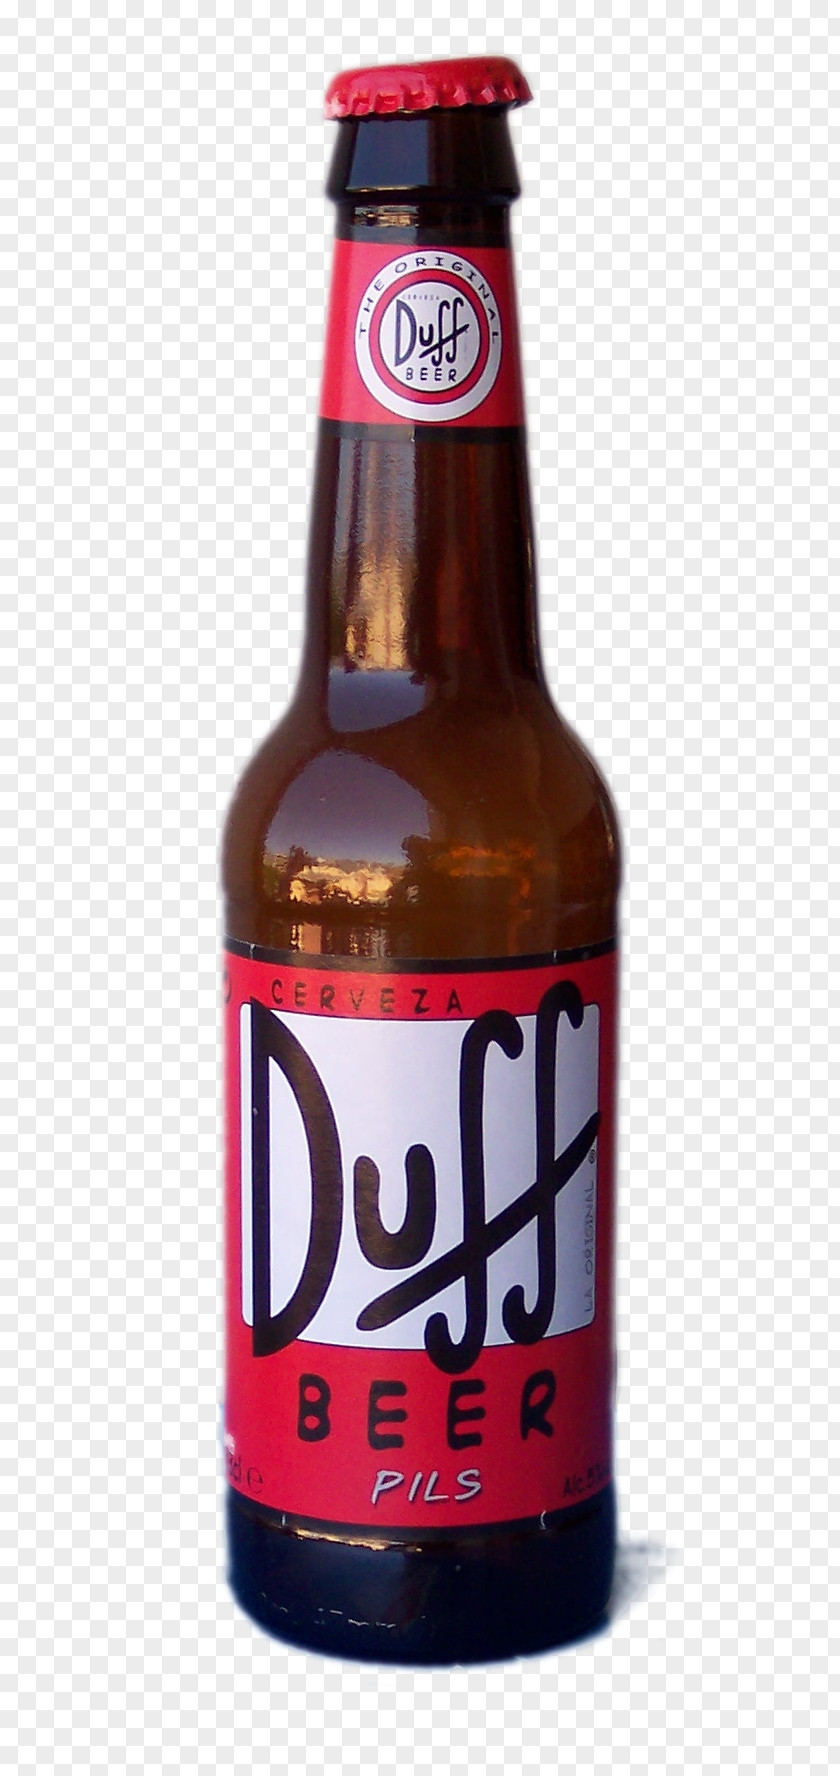 Bottle Image, Free Download Image Of Duff Beer Budweiser PNG